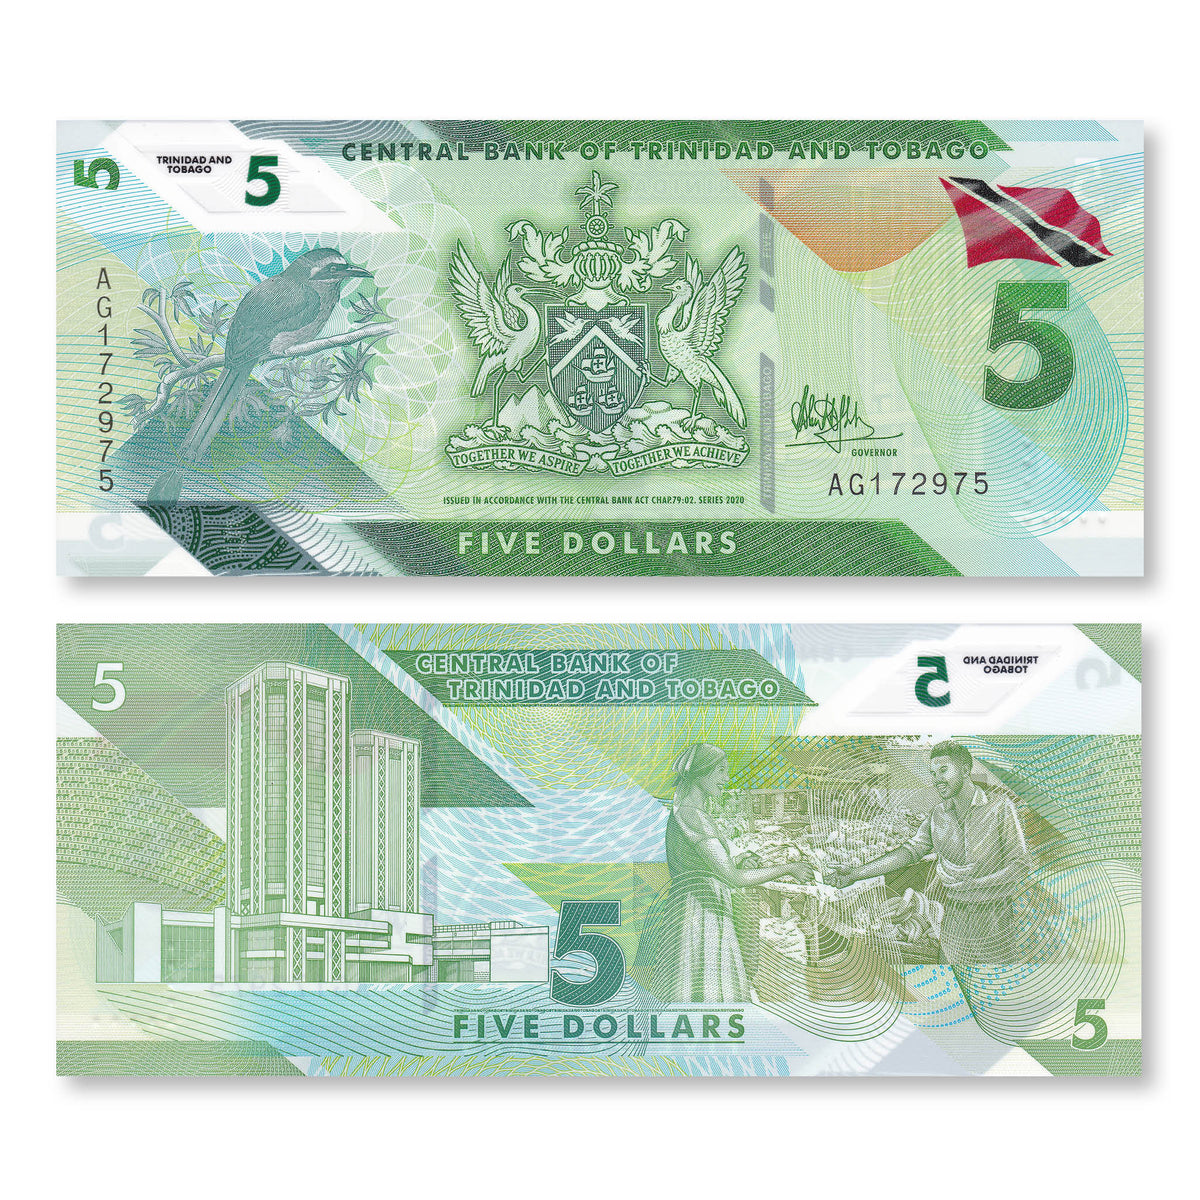 Trinidad & Tobago 5 Dollars, 2020, B237a, Trinidad's first polymer series, UNC - Robert's World Money - World Banknotes